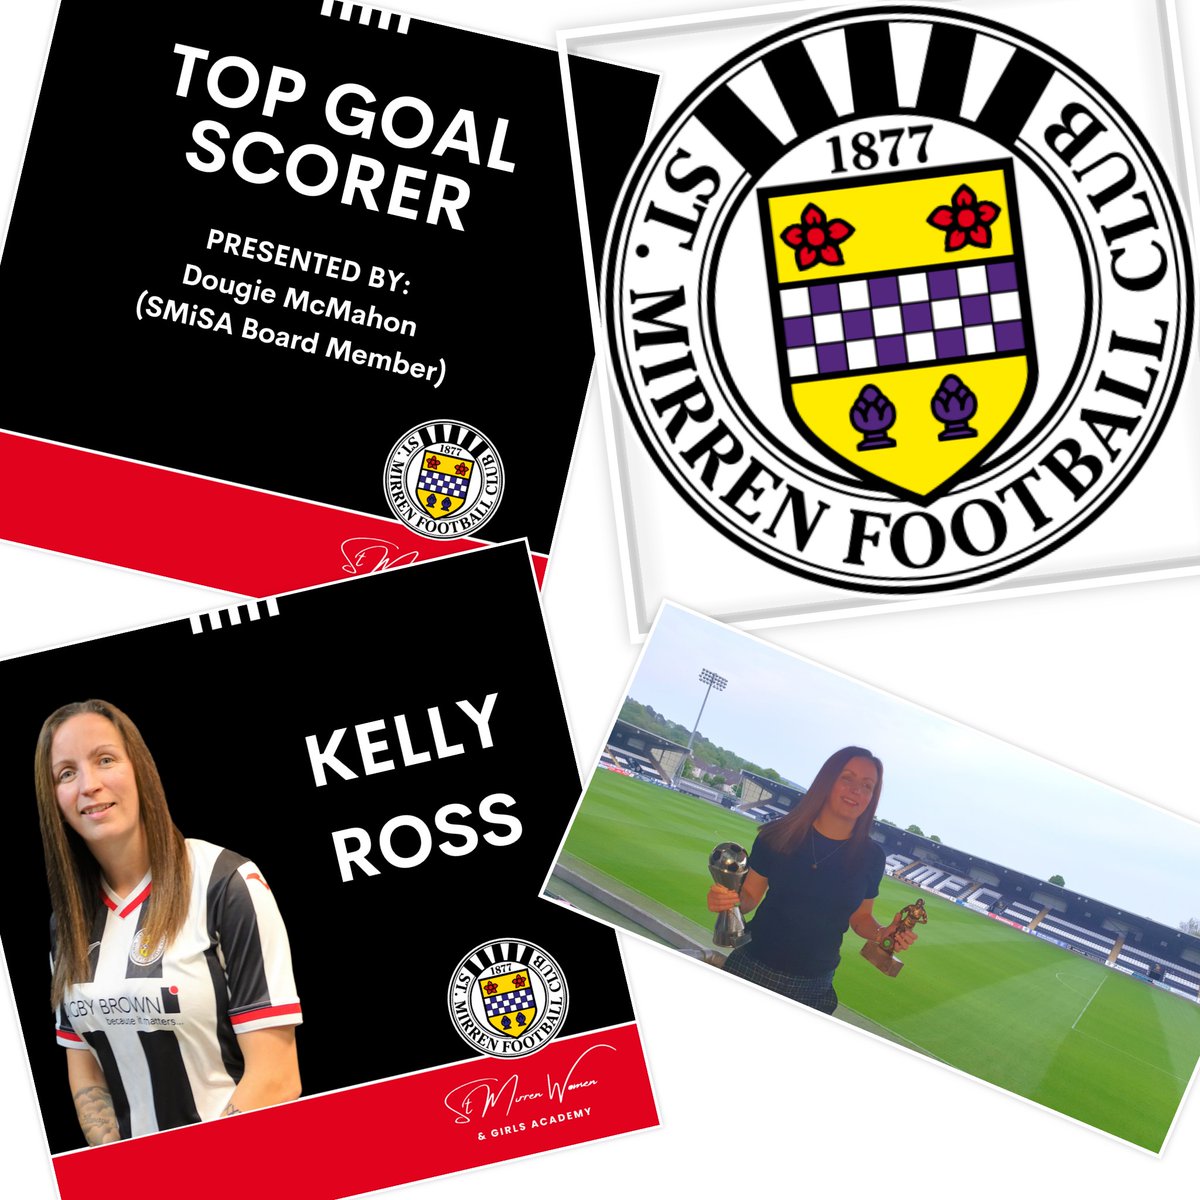 🐼SMWFC POTY AWARDS
Top Goal Scorer.
Congratulations to Kelly Ross ... keep them coming next season!
#swfleagueone #OurStMirren